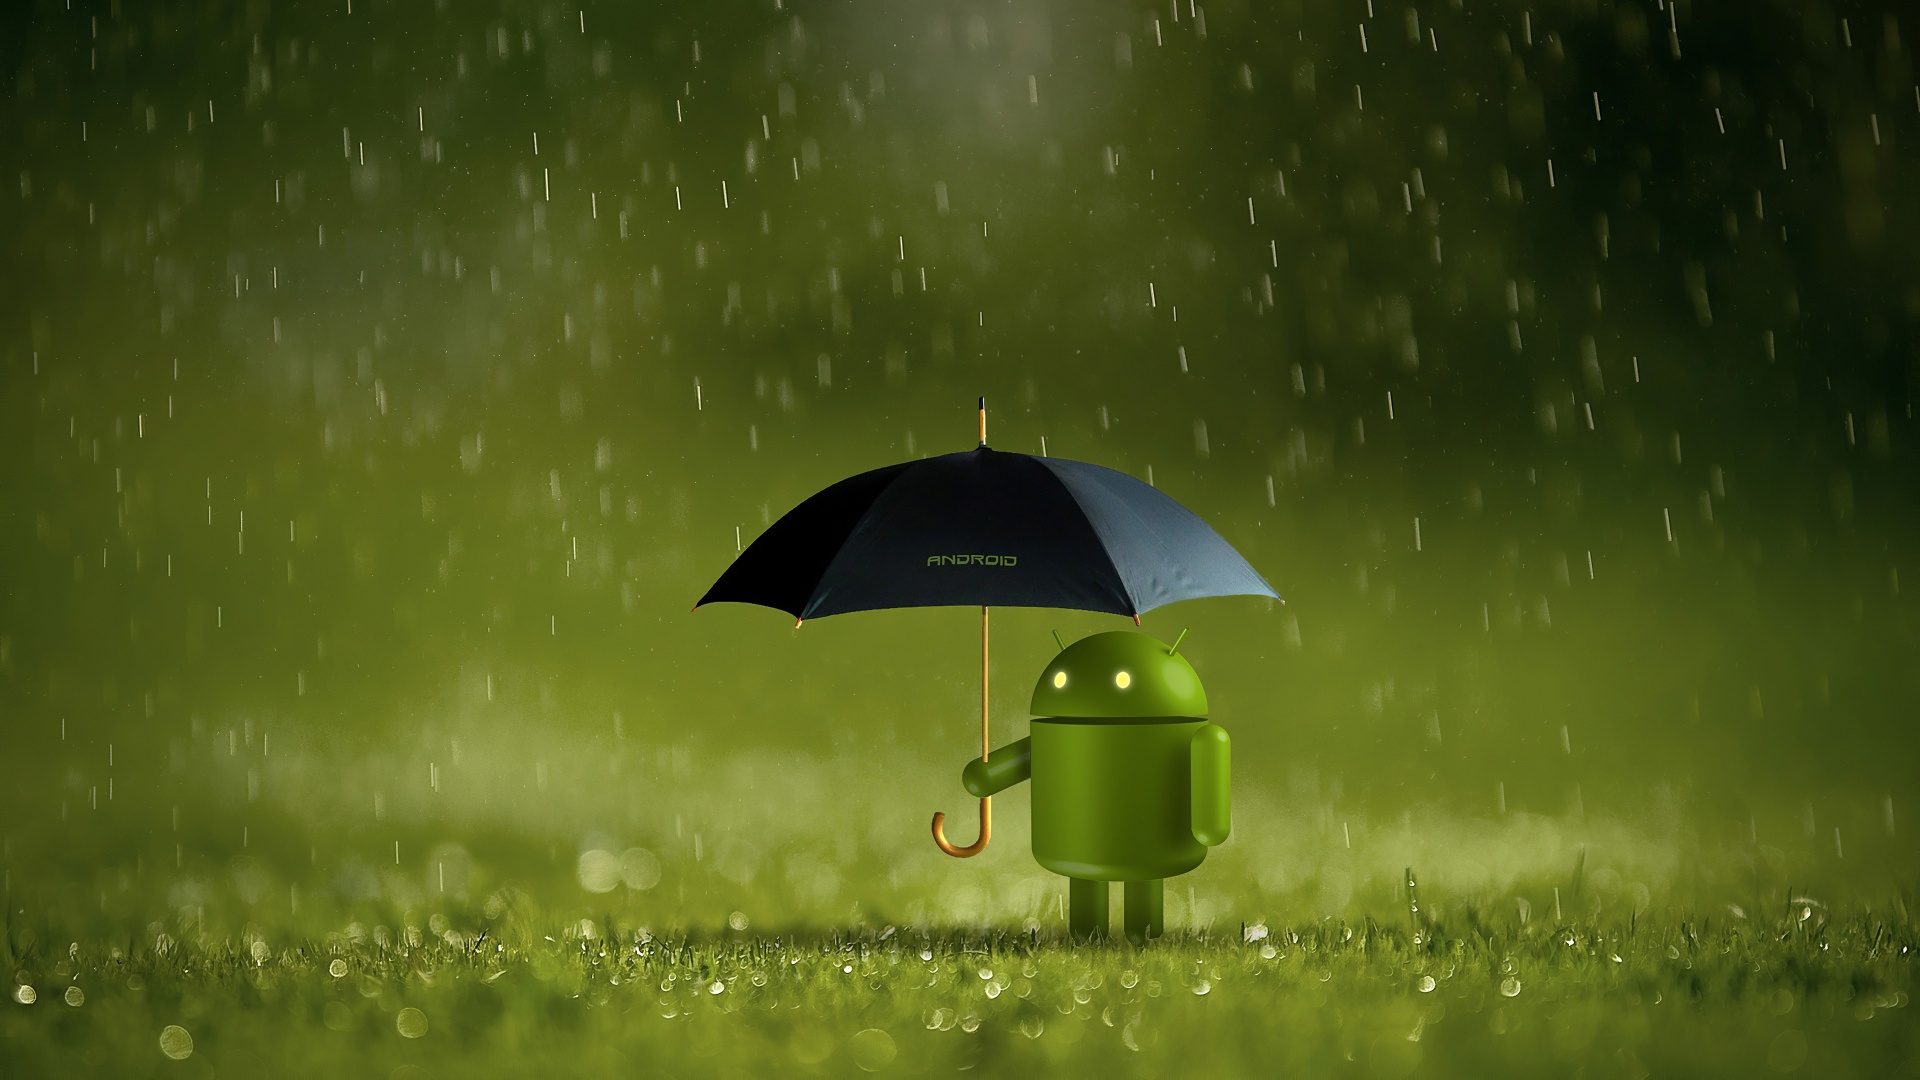 Android Logo 4k Wallpaper Android Robot Umbrella Rain Green Technology 1571